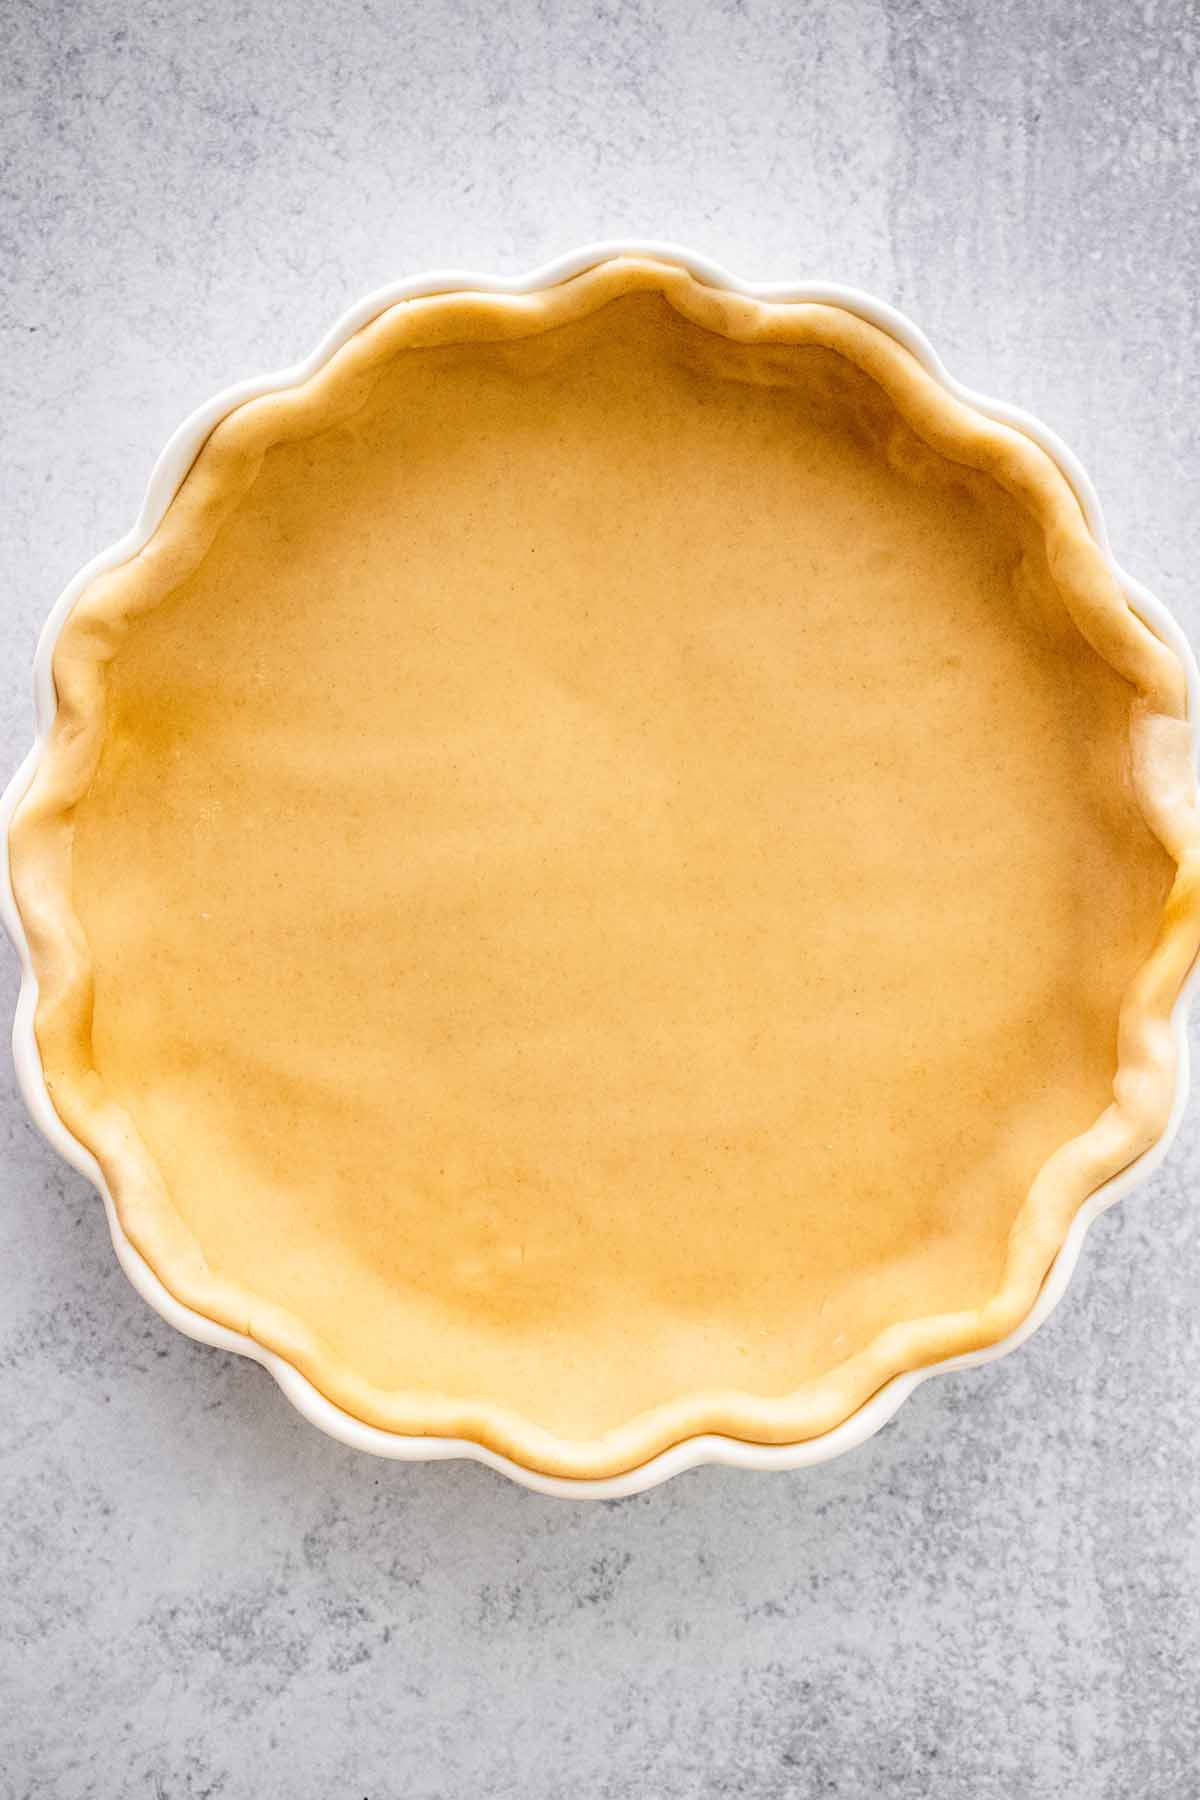 Unbaked pie crust in a white quiche dish.